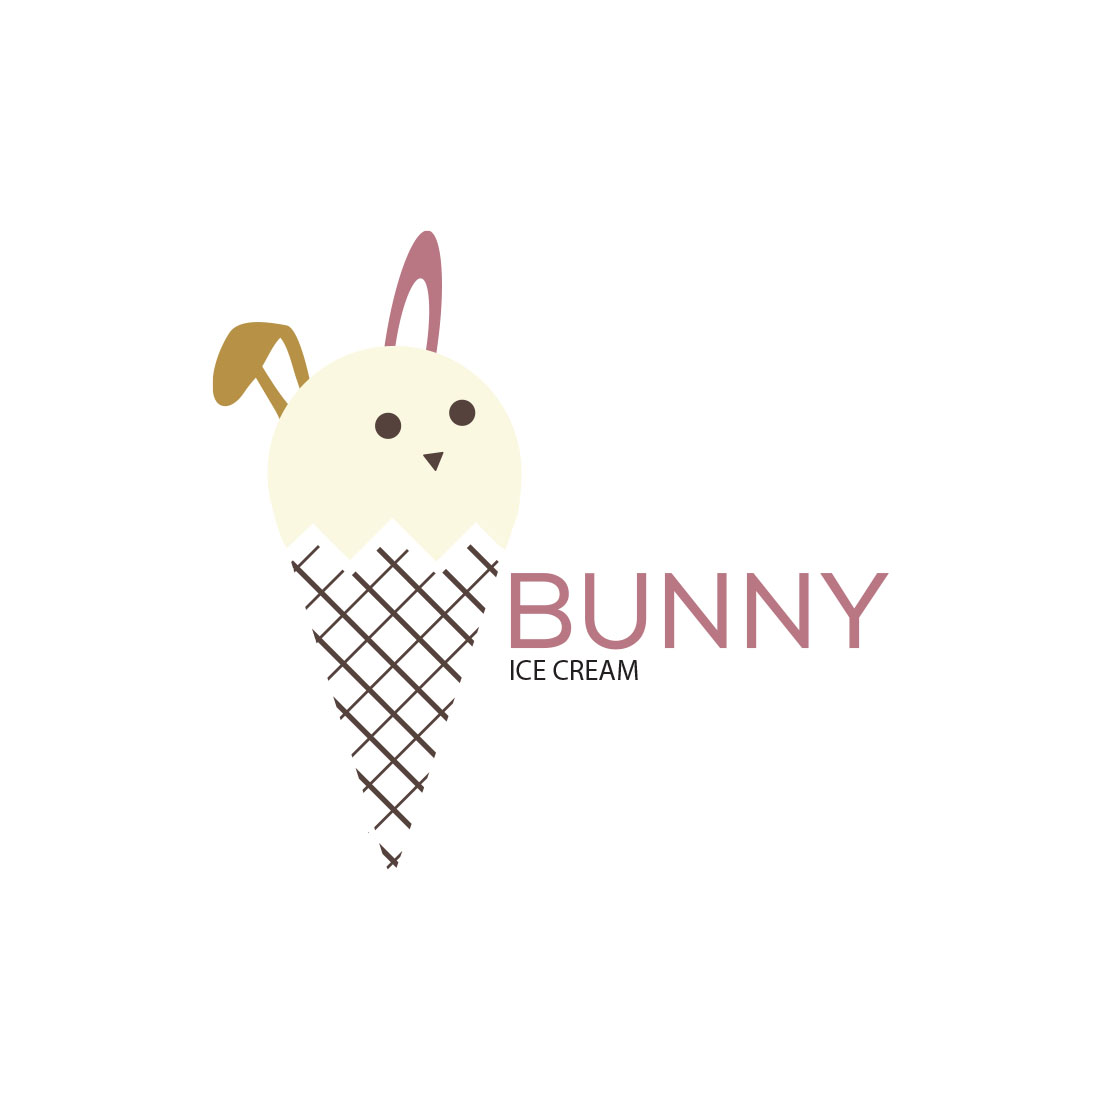 Creative Bunny Ice Cream Logo presentation.